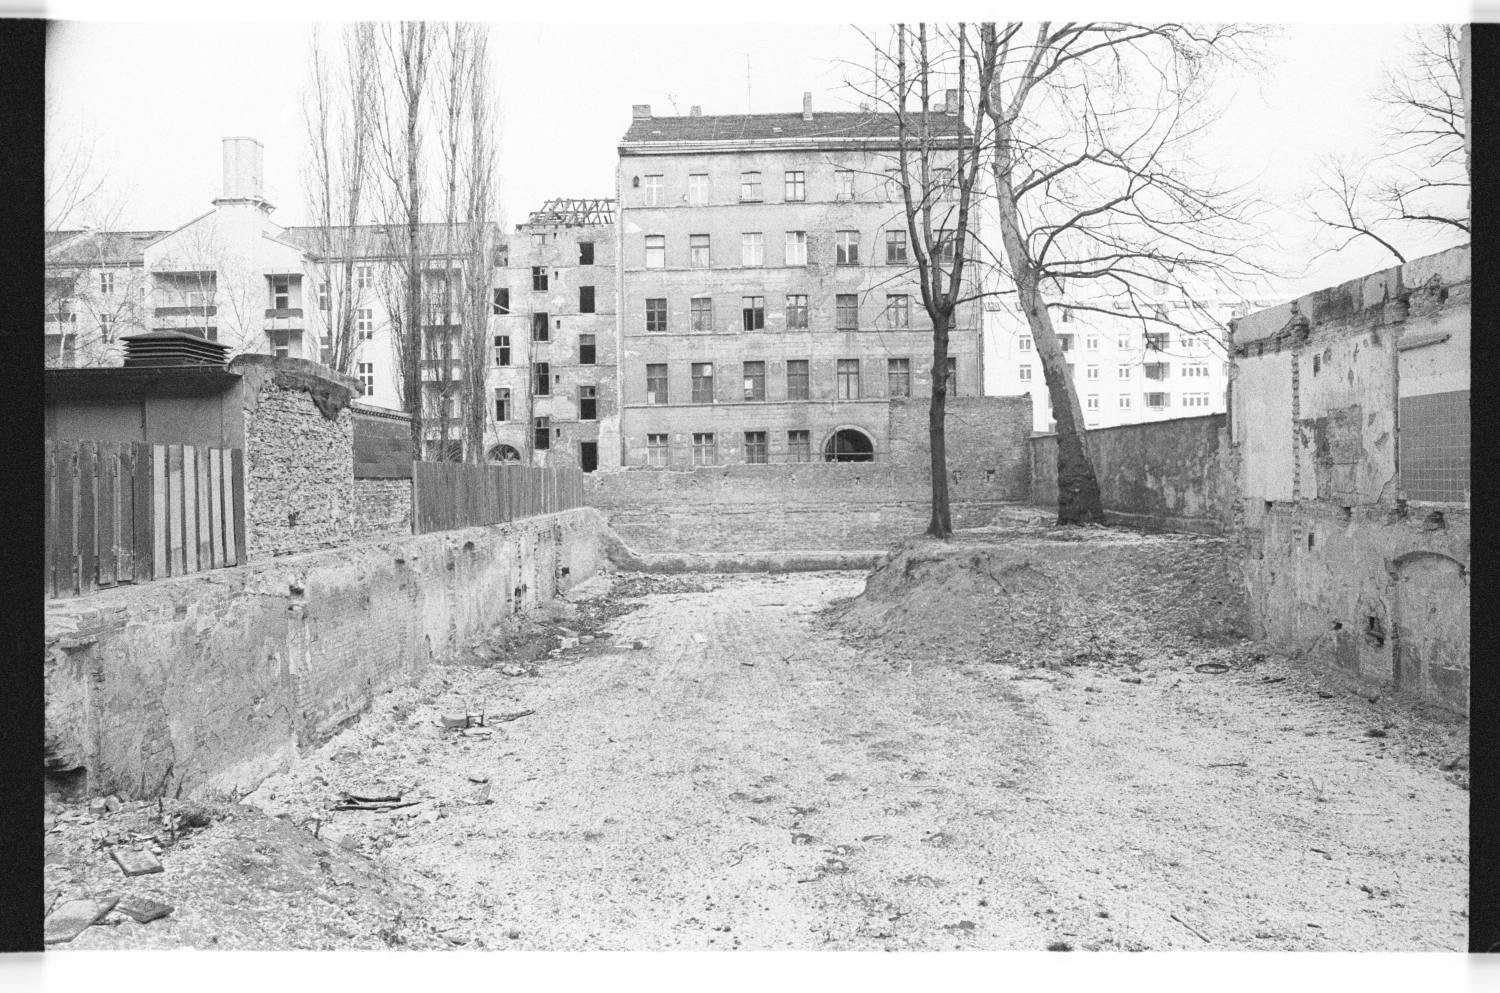 Kleinbildnegative: Baugrundstück, Winterfeldtstr. 27, 1981 (Museen Tempelhof-Schöneberg/Jürgen Henschel RR-F)